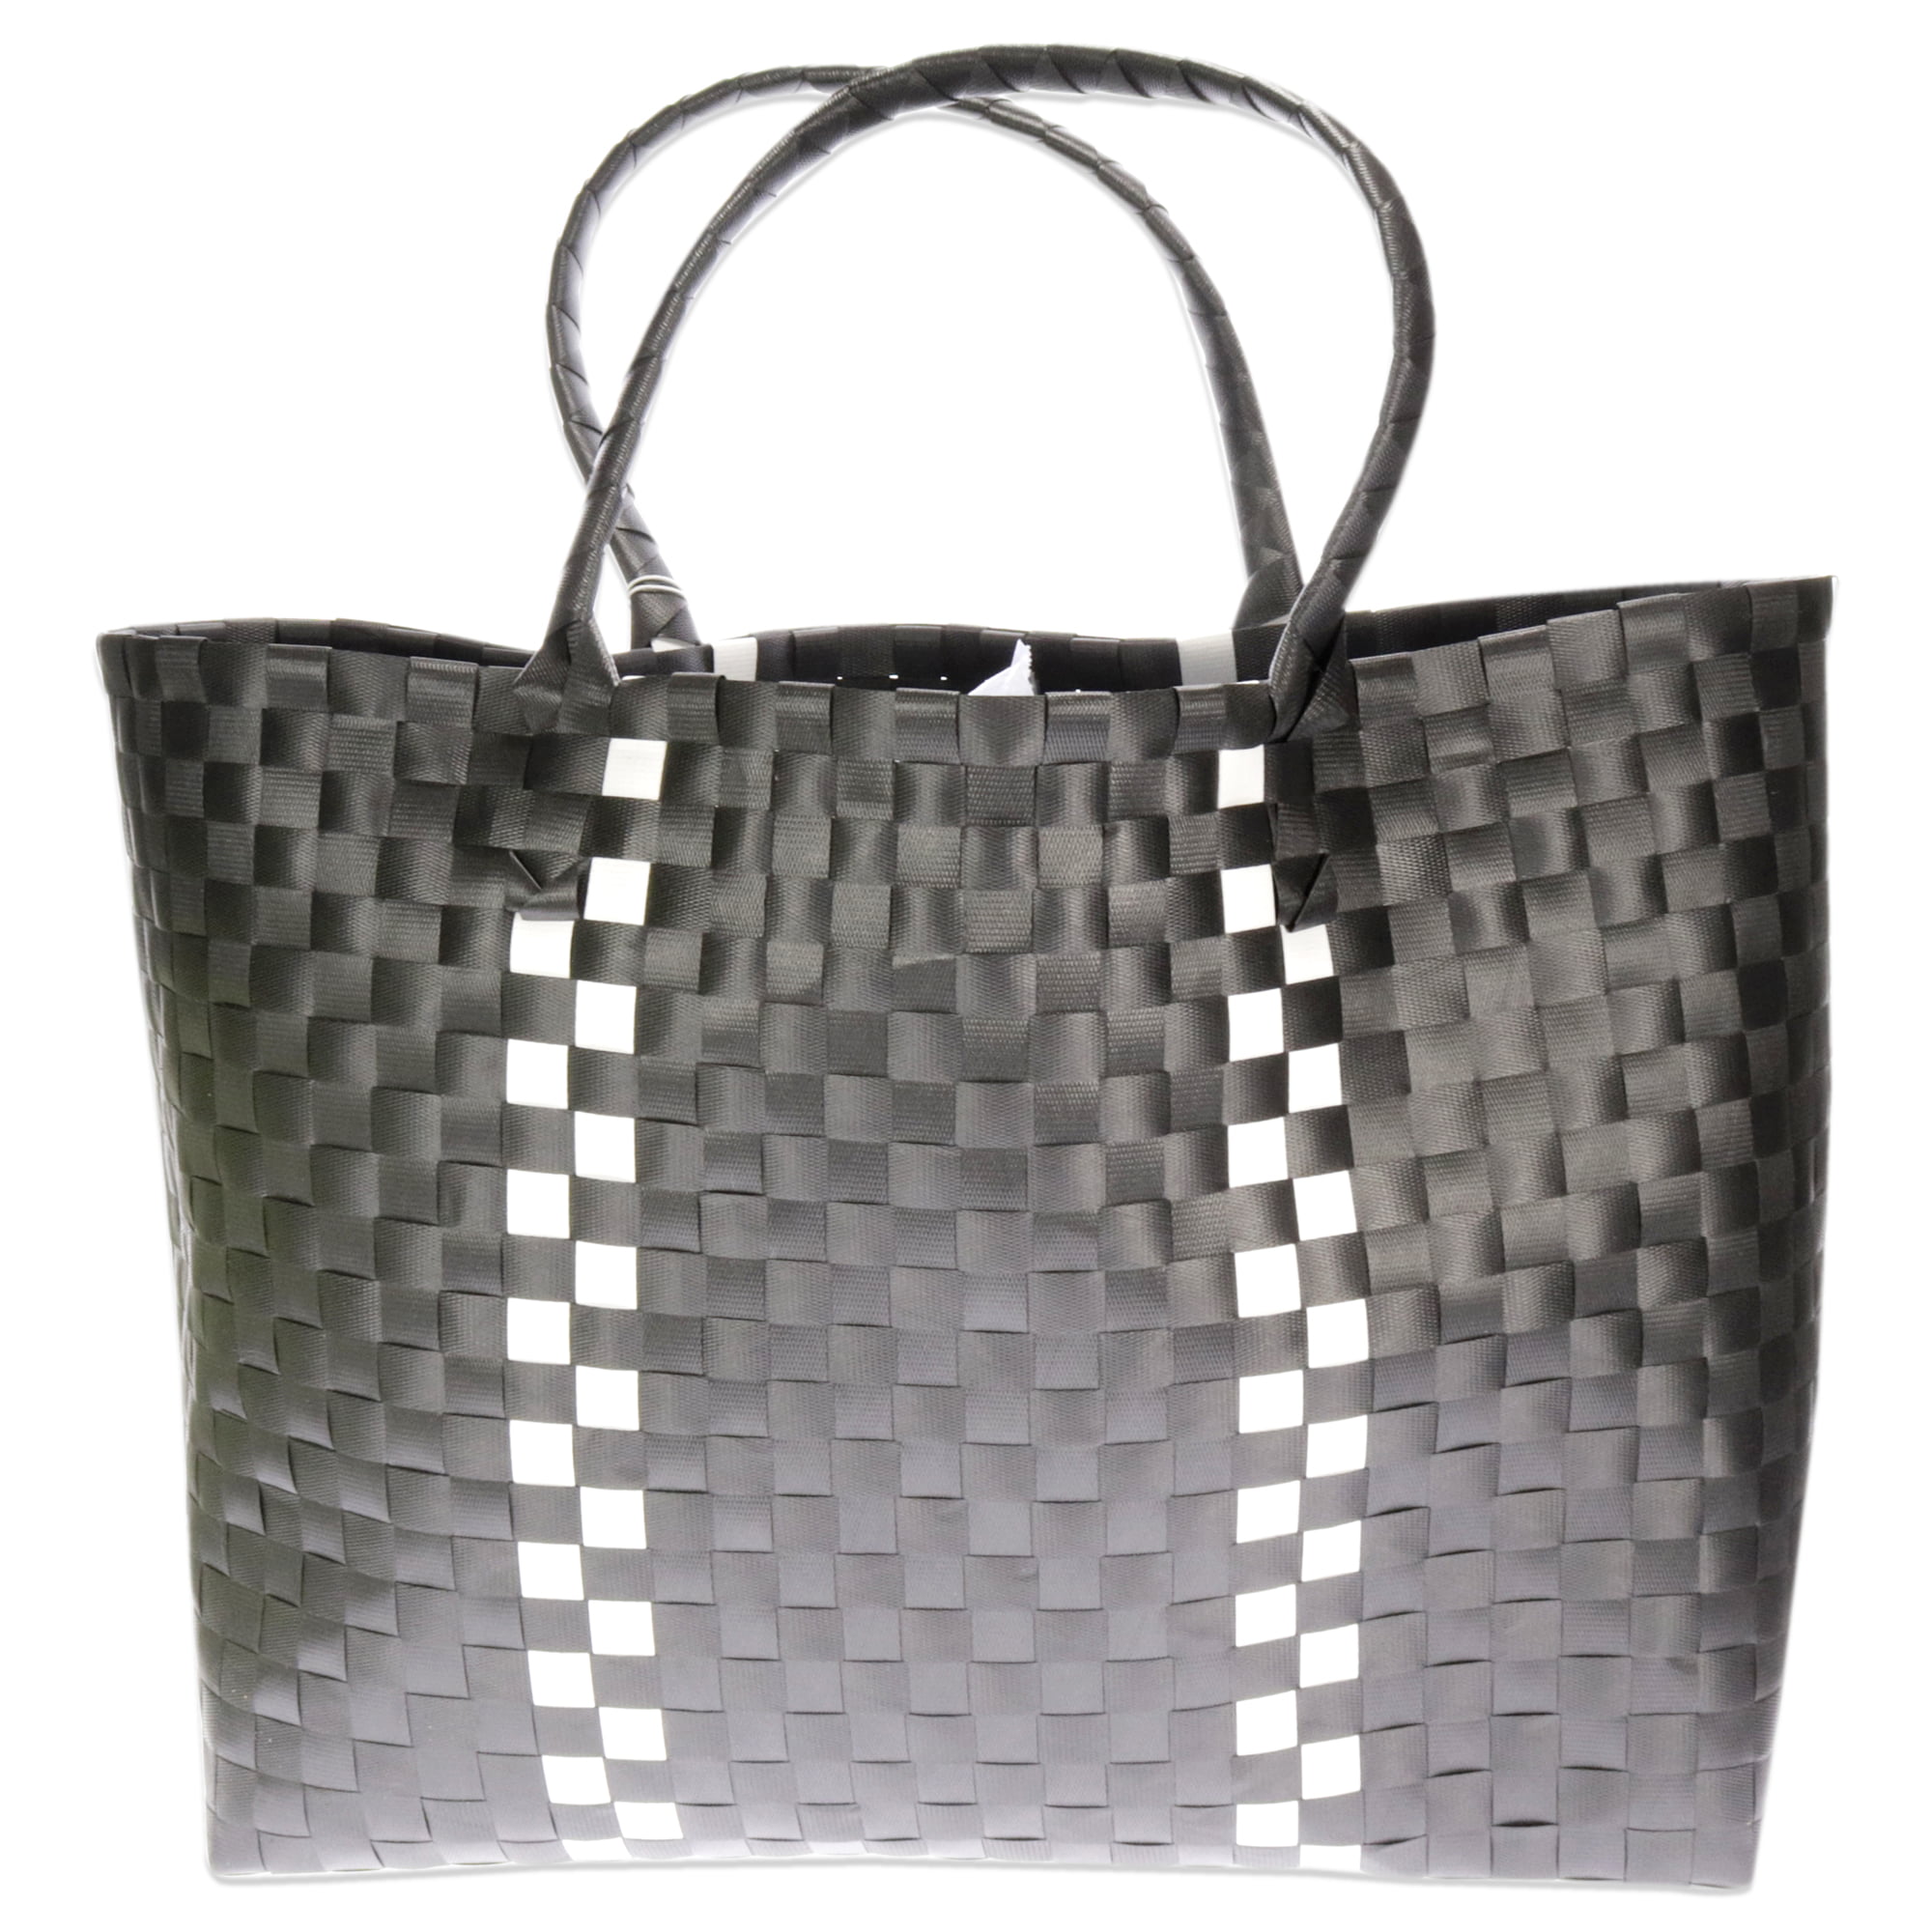 GWP Tote Bag Crossbranded - Black-White by Kate Spade for Women - 1 Pc Bag  